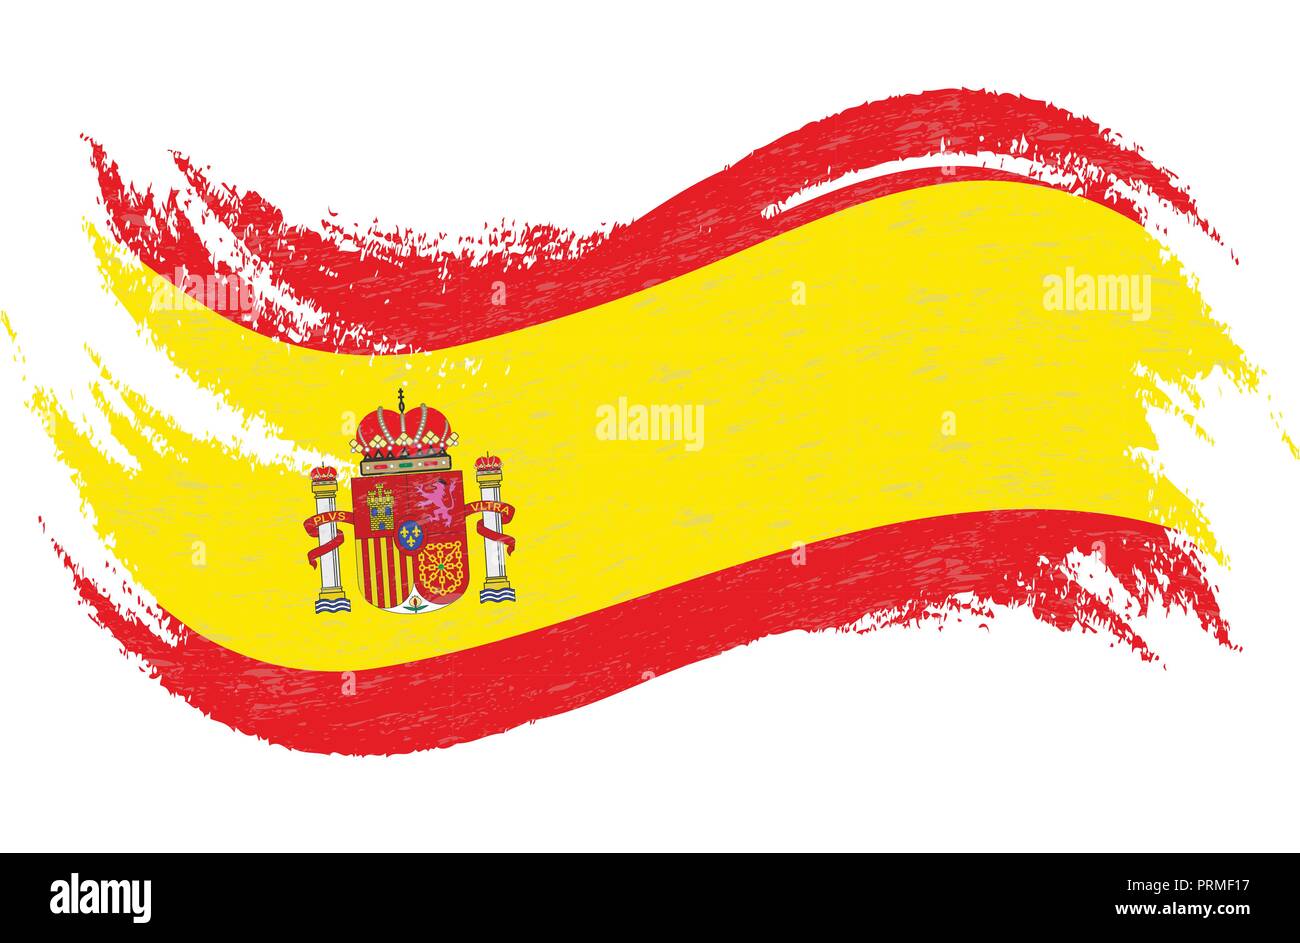 National Flag Of Spain, Designed Using Brush Strokes,Isolated On A White Background. Vector Illustration. Stock Vector